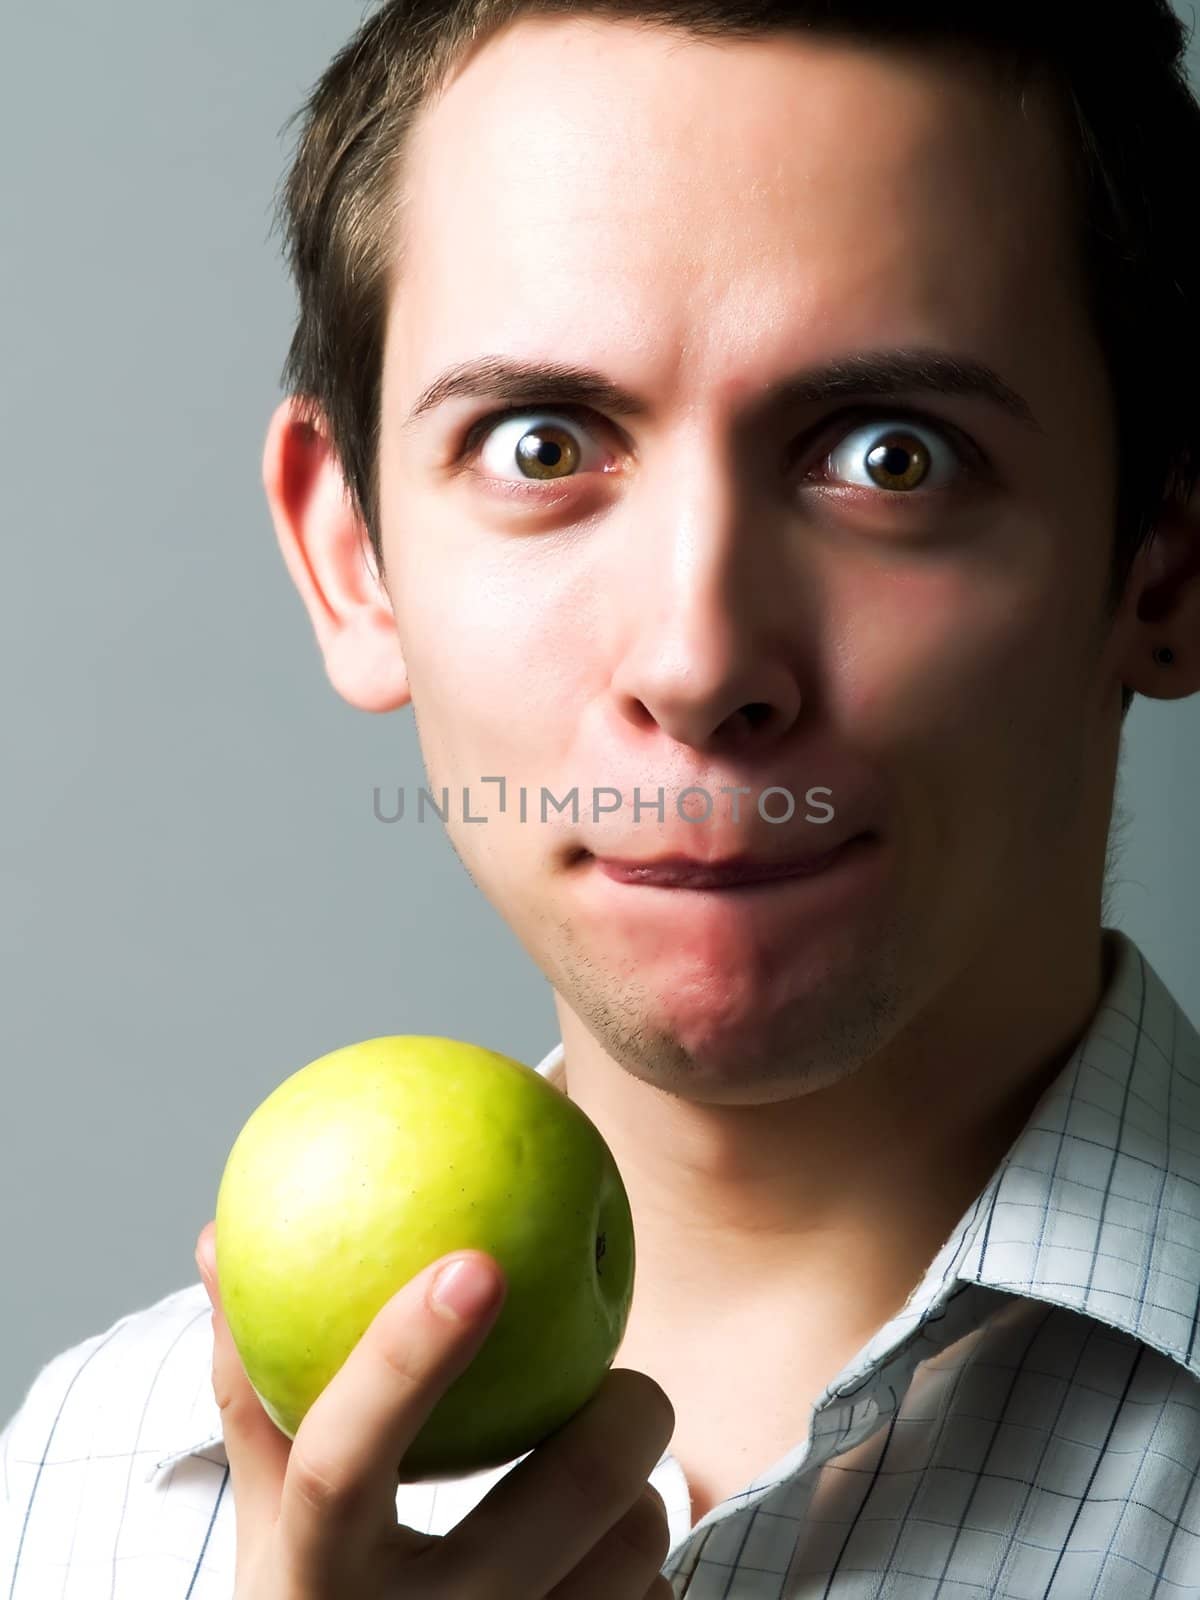 Eating an apple by henrischmit